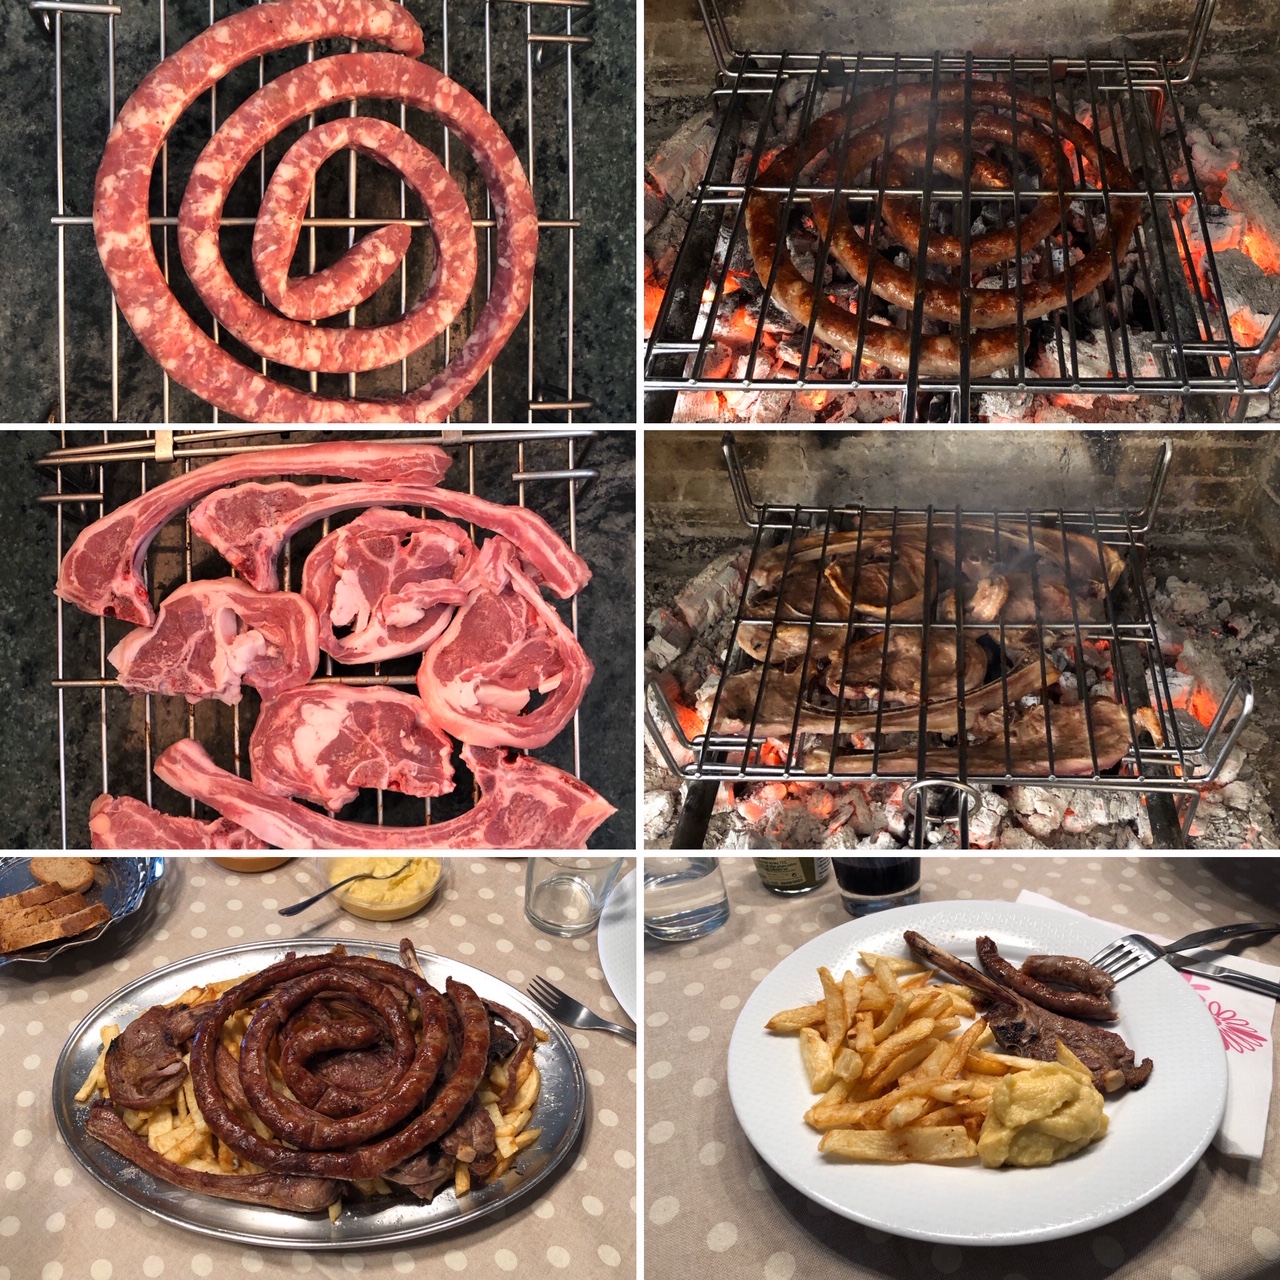 20191116 03 carn salsitxes a la brasa amb patates fregides